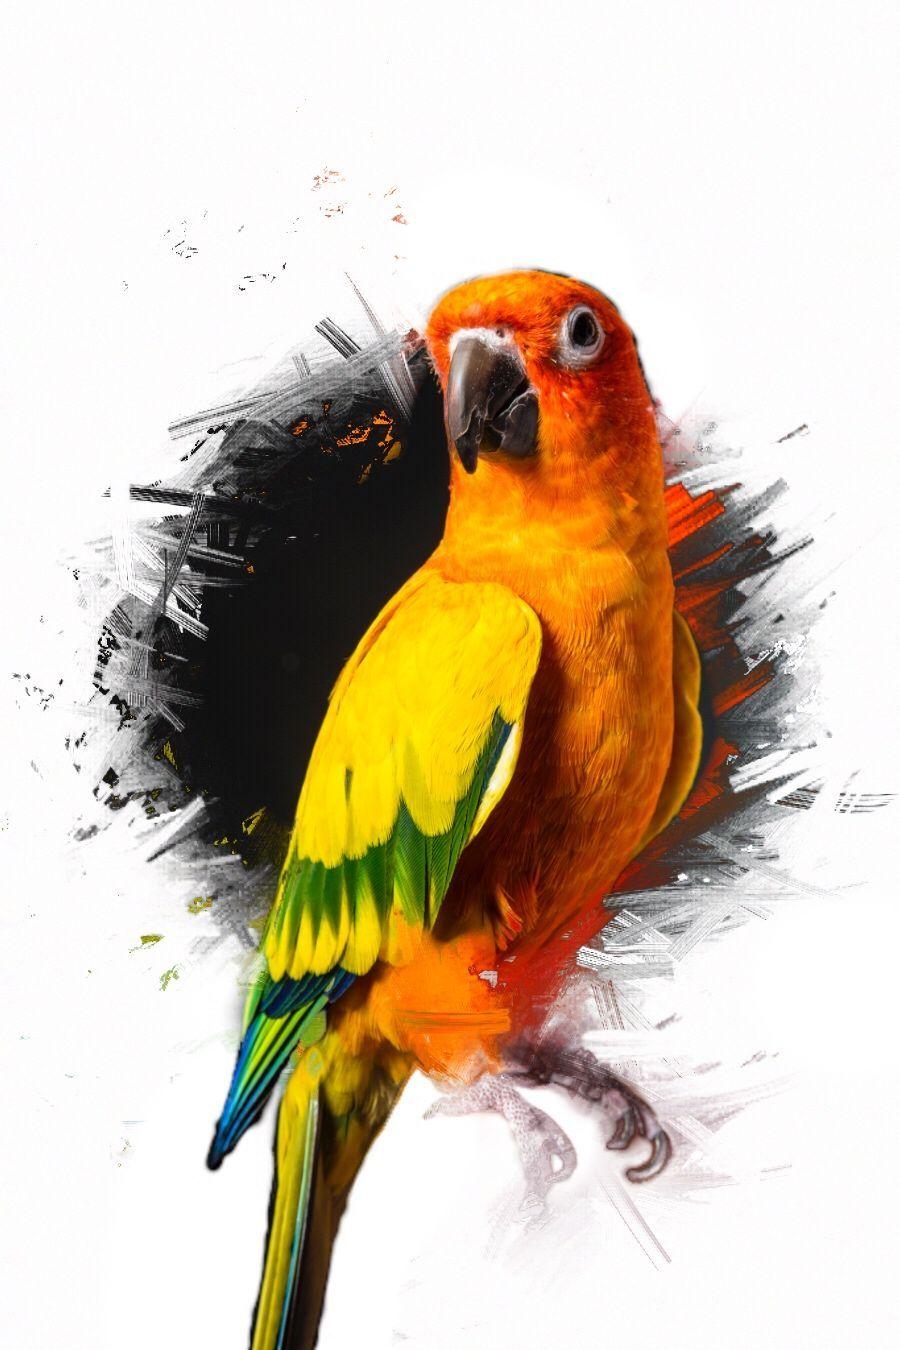 Logan Paul Maverick Logo - Maverick the parrot | ramdom | Logan paul, Logan, Maverick logan paul